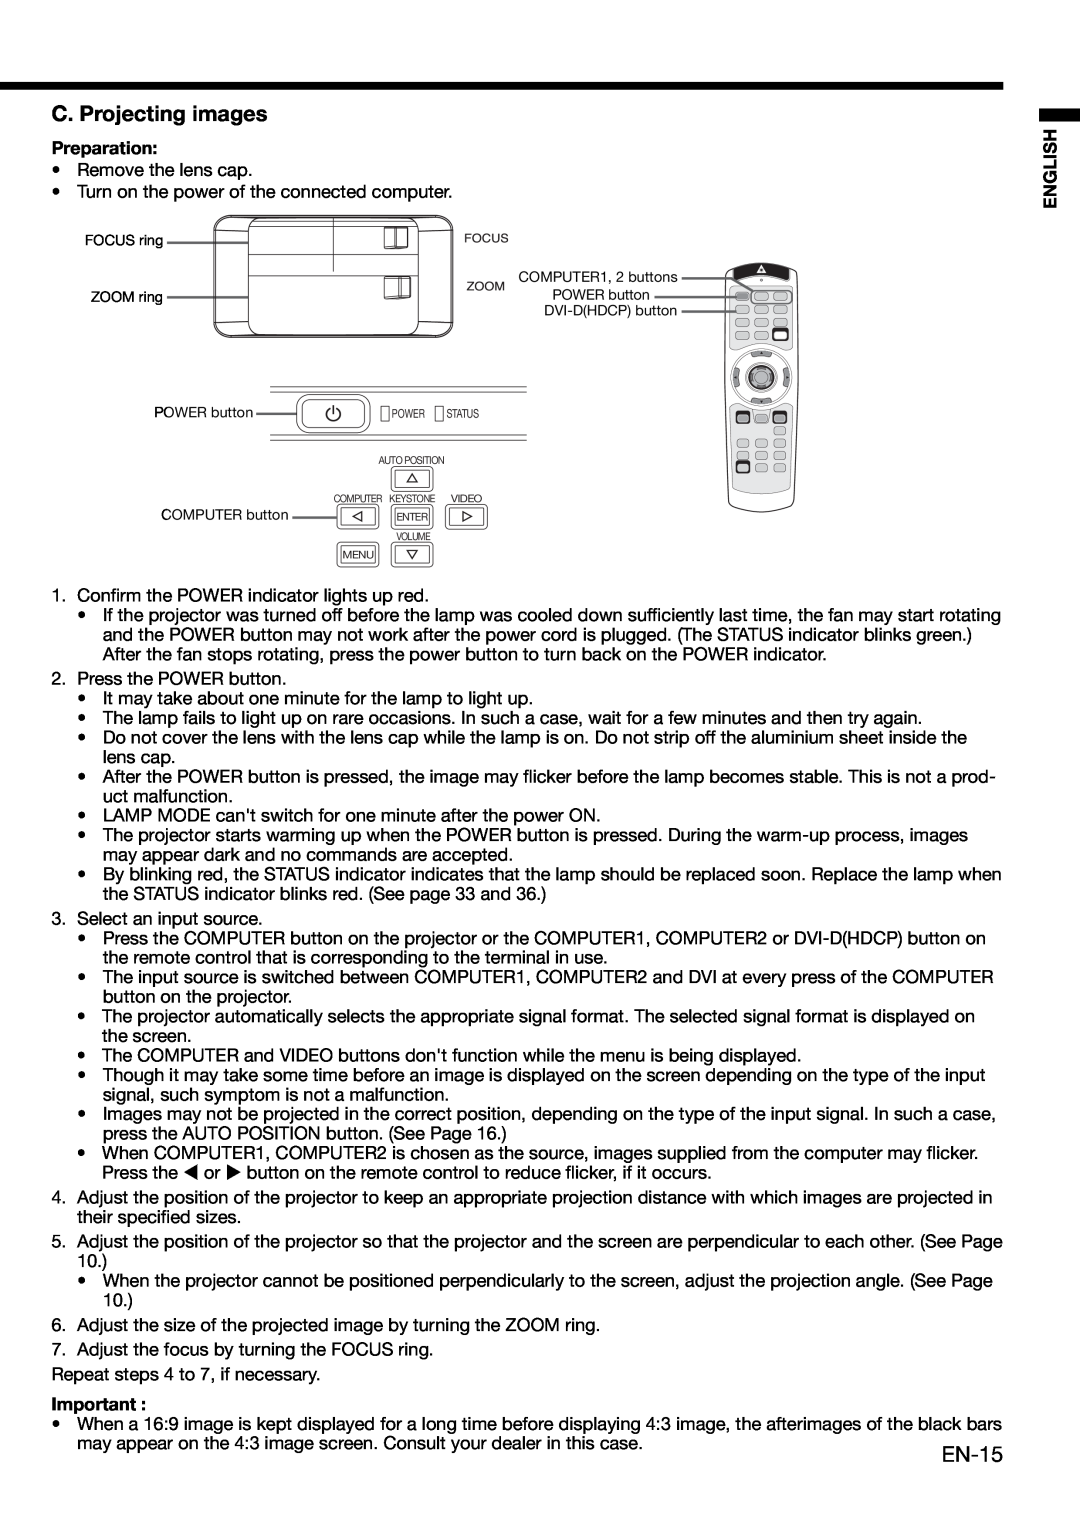 Mitsubishi Electronics XD460U user manual C. Projecting images, Preparation, English 